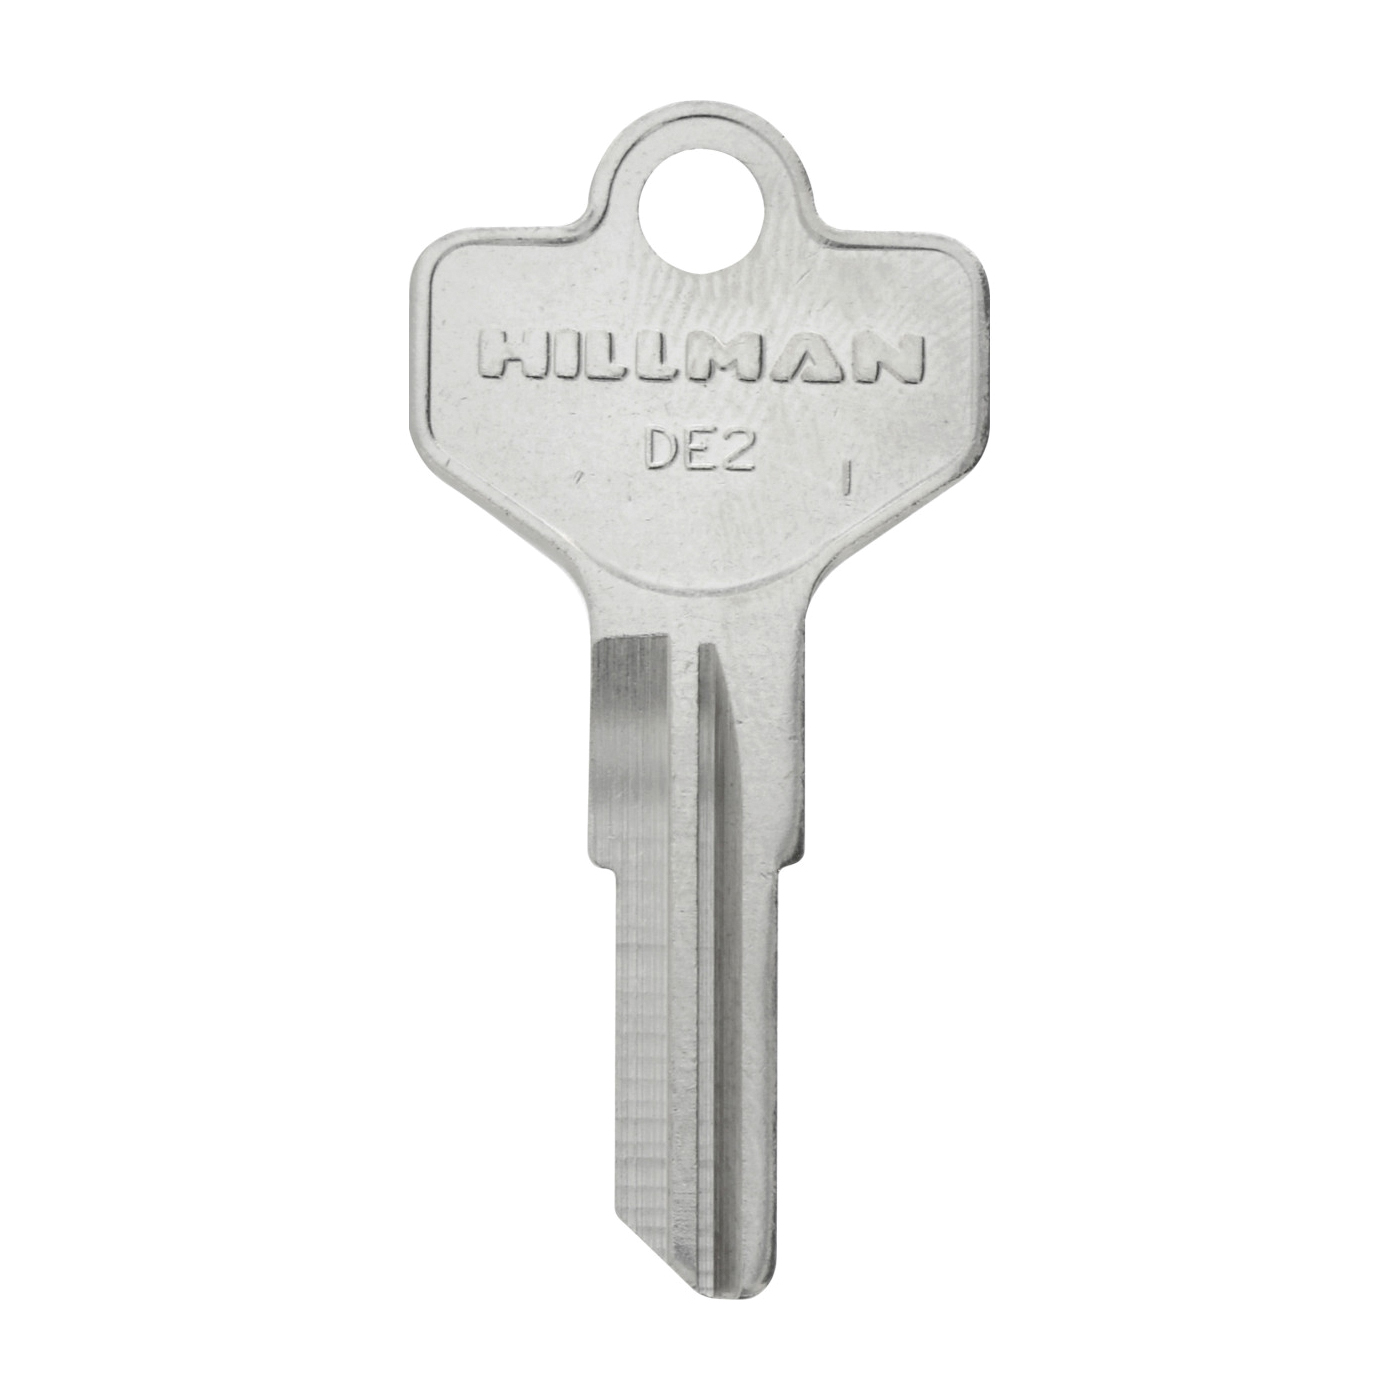 Hillman 441610 Key, For: Dexter Locks